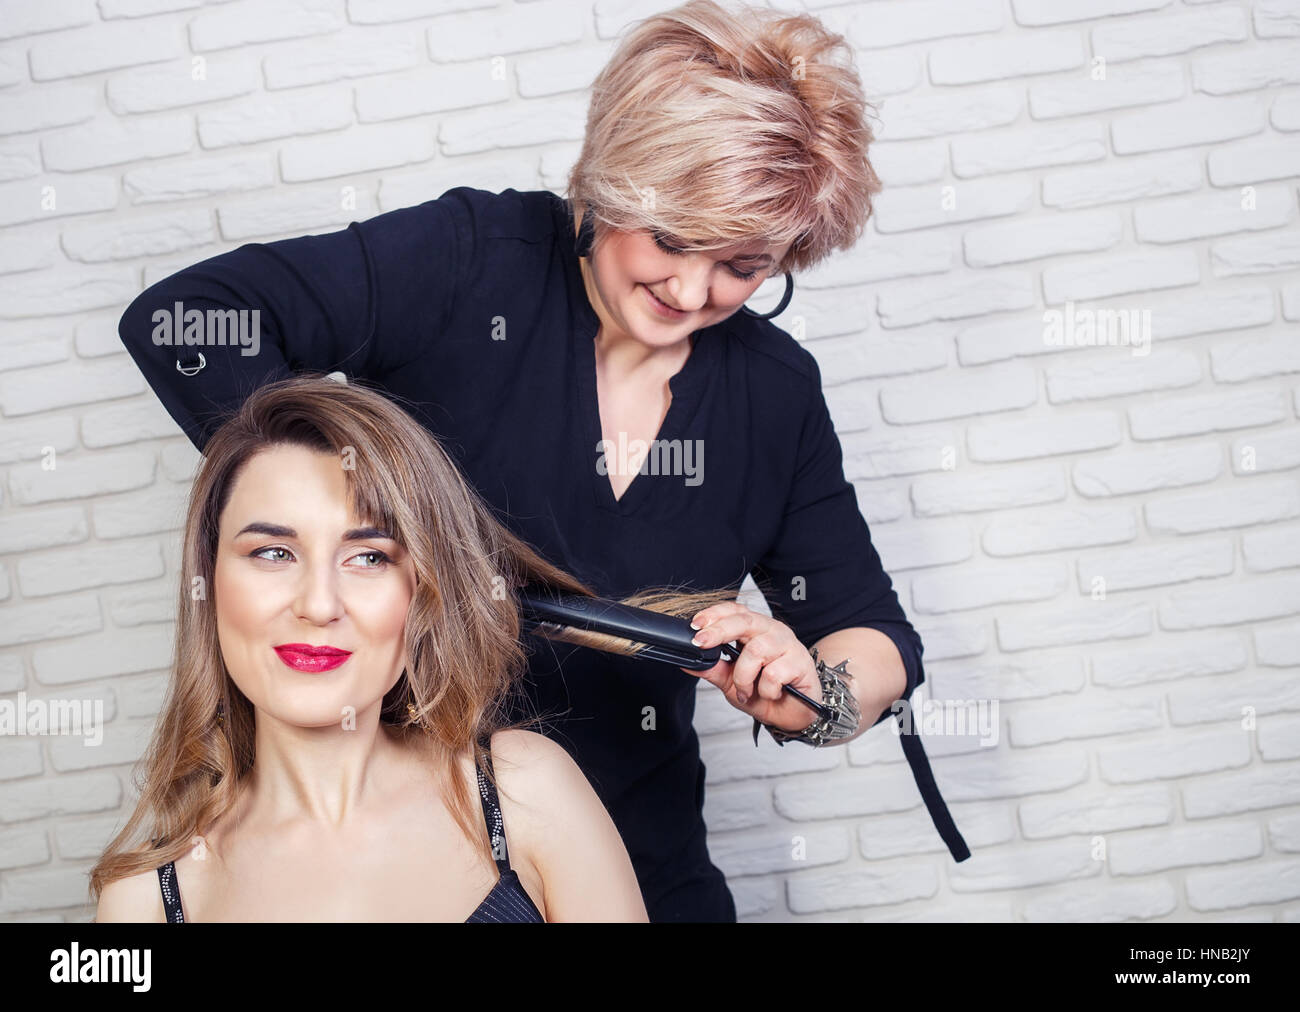 hairdresser curling hair Stock Photo